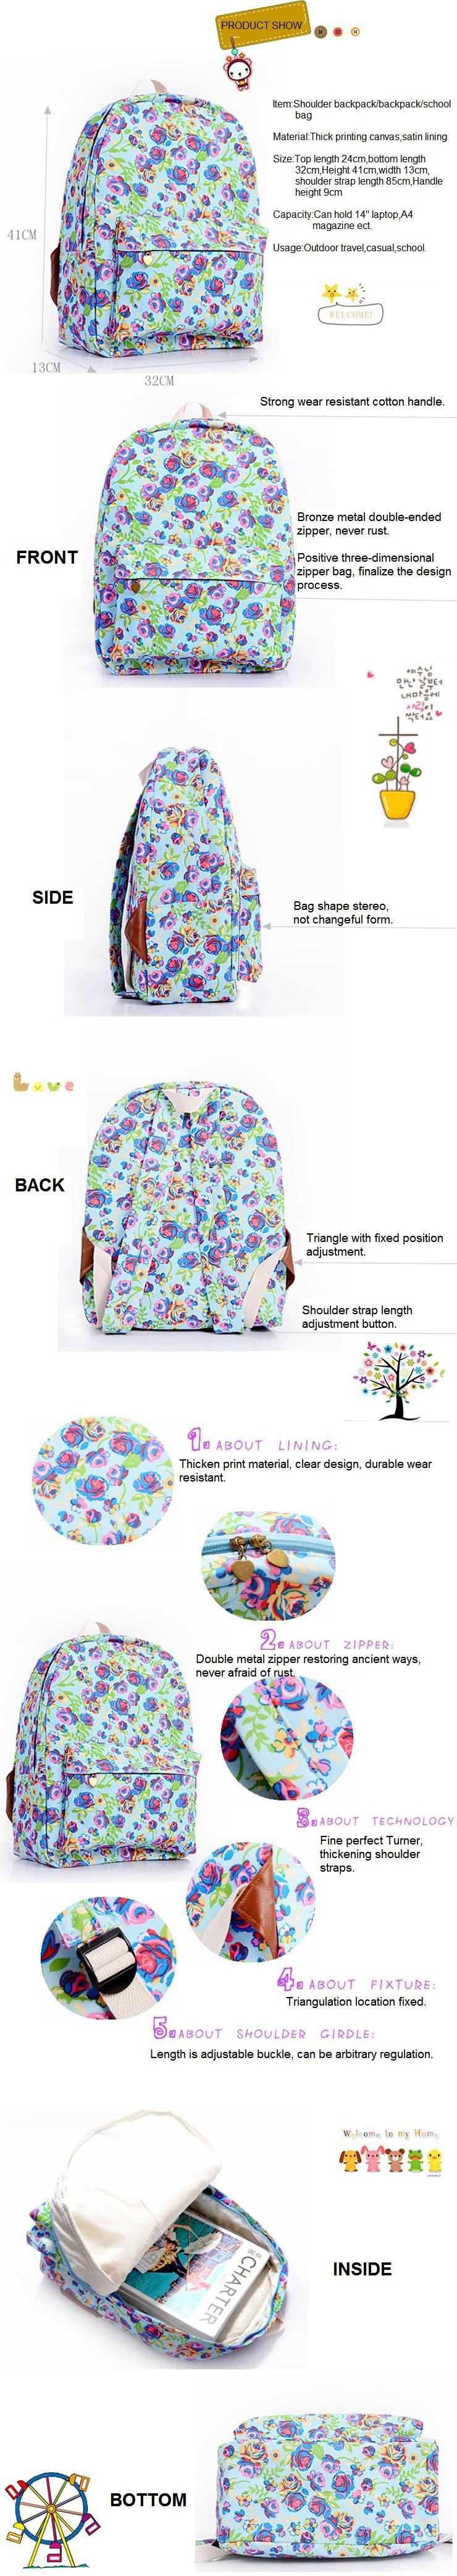 Women\'s-canvas-printing-backpack-Simpson-school-bags-for-teenage-girls-mochila-feminina-school-backpacks-Free-shipping-2